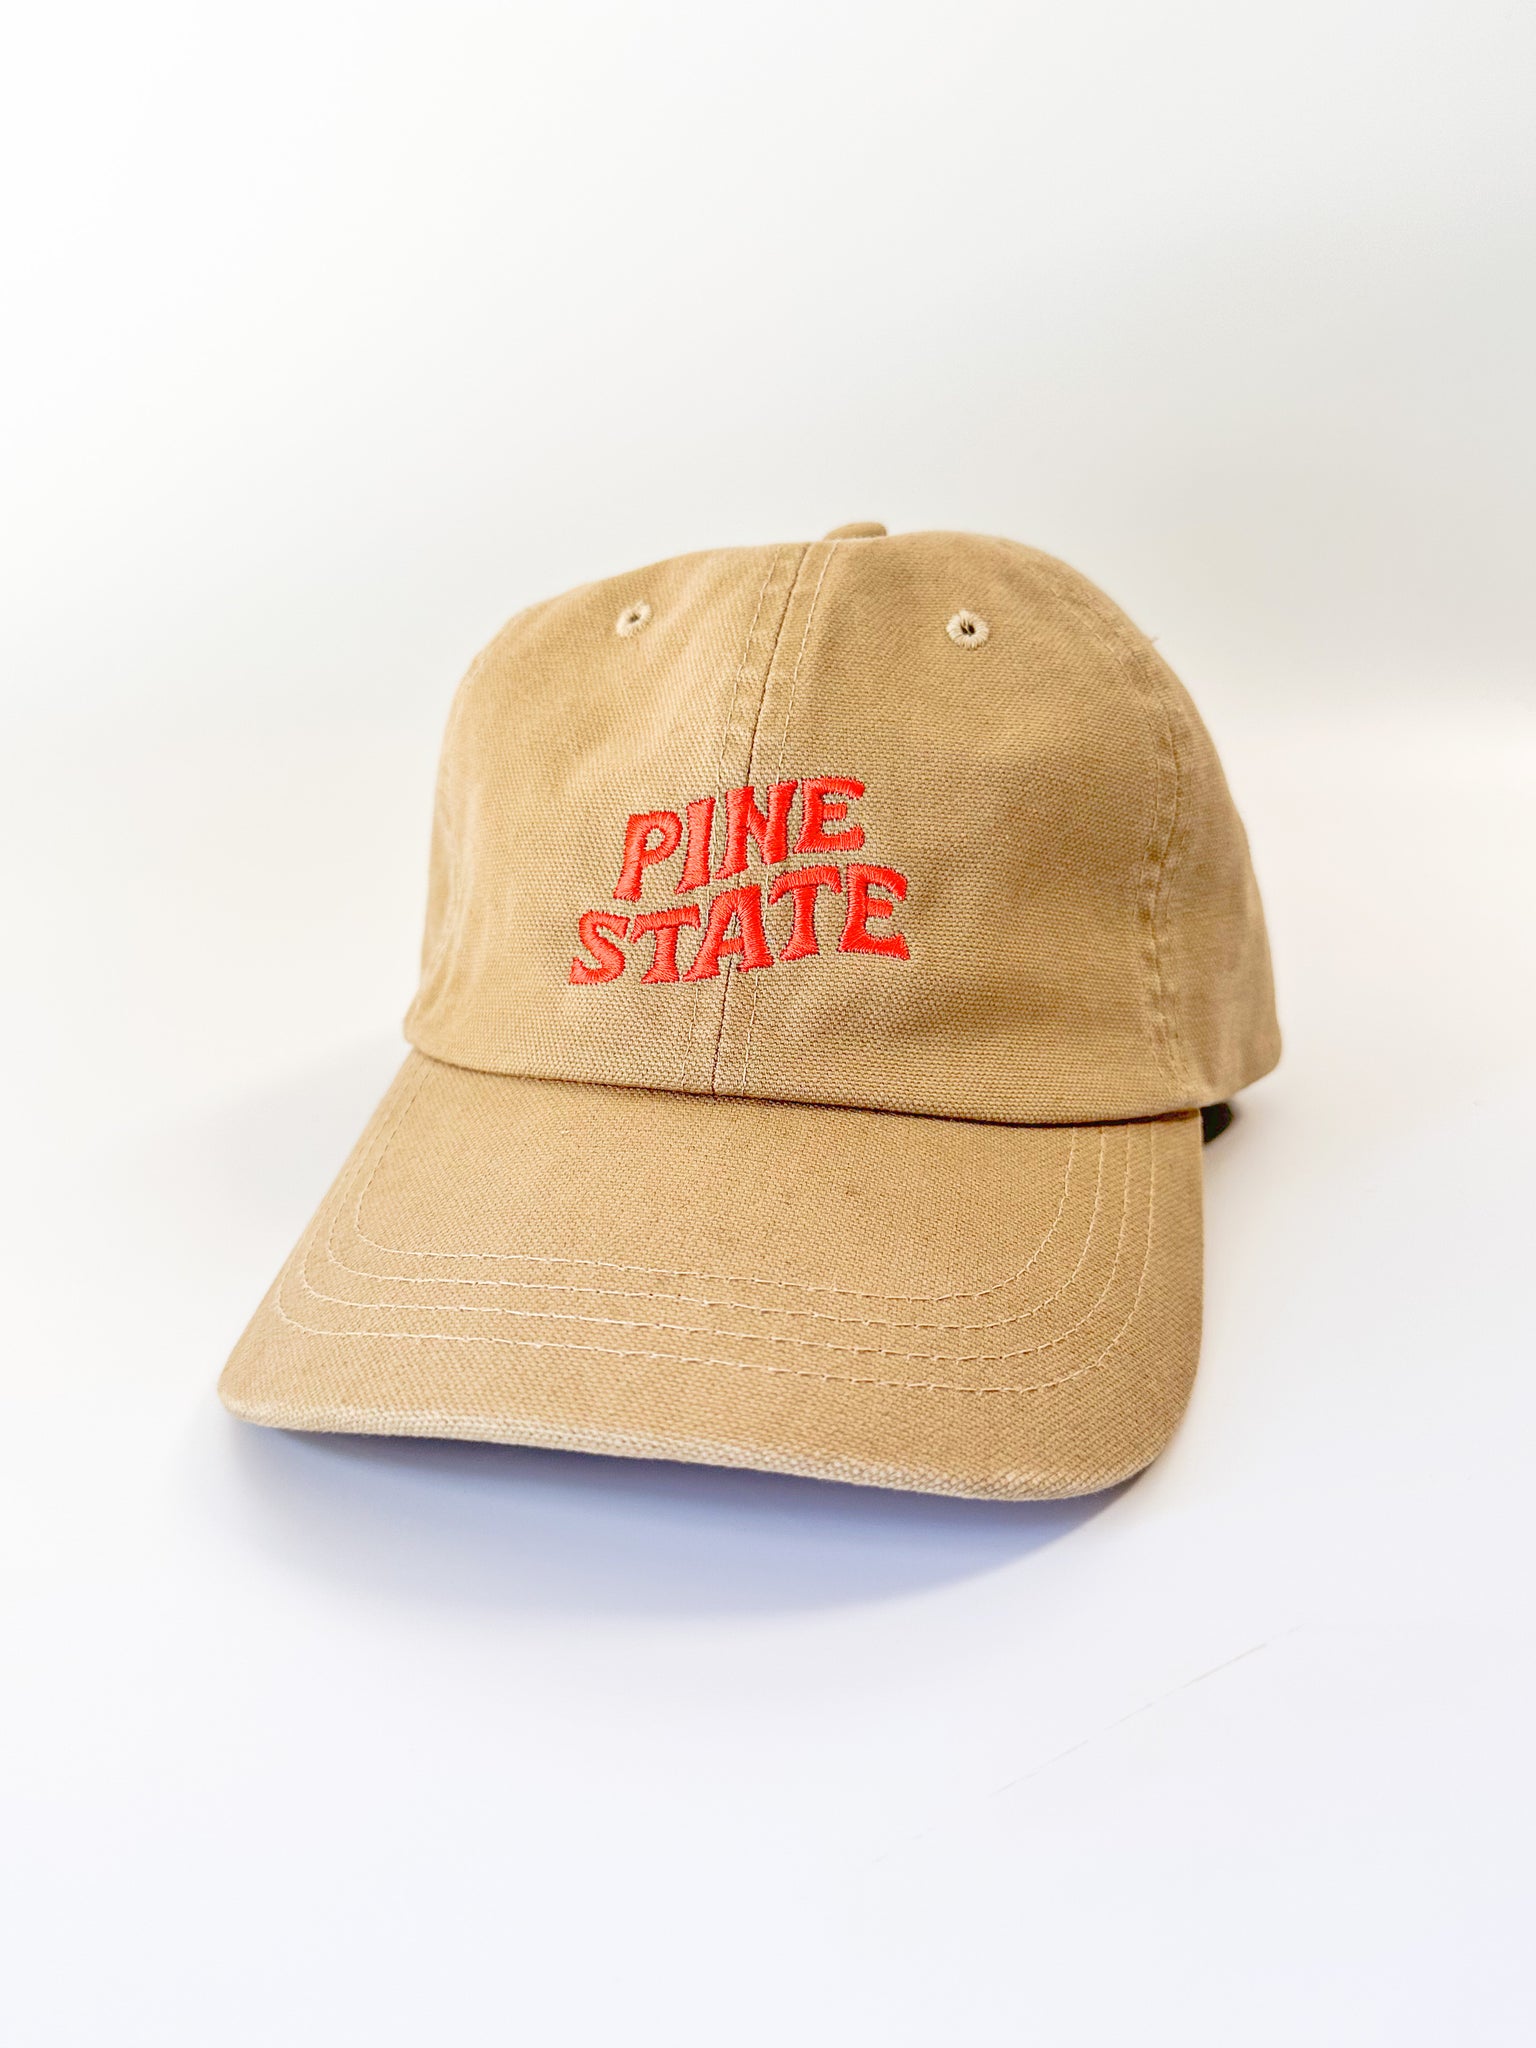 Pine State Hat